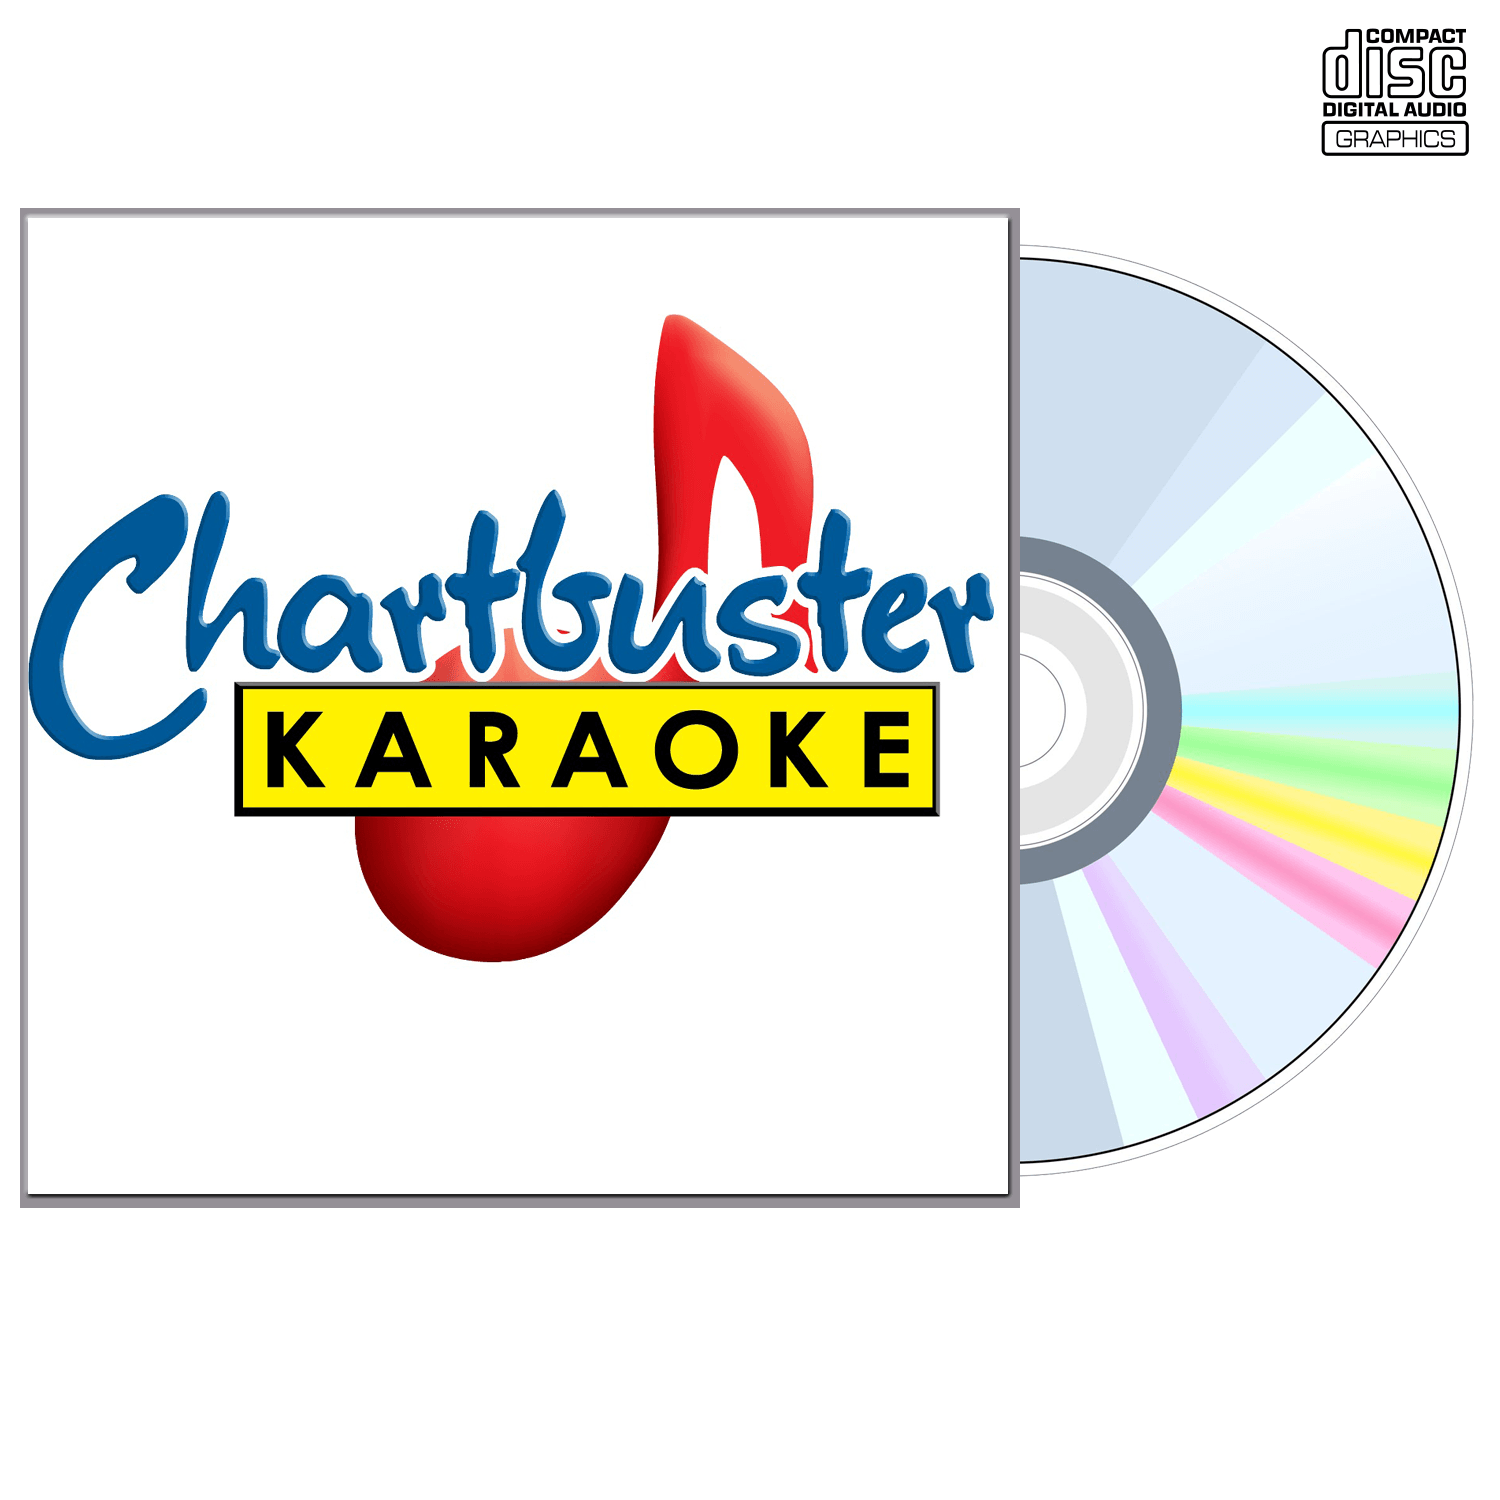 The Weird And Wonderful - CD+G - Chartbuster Karaoke - Karaoke Home Entertainment